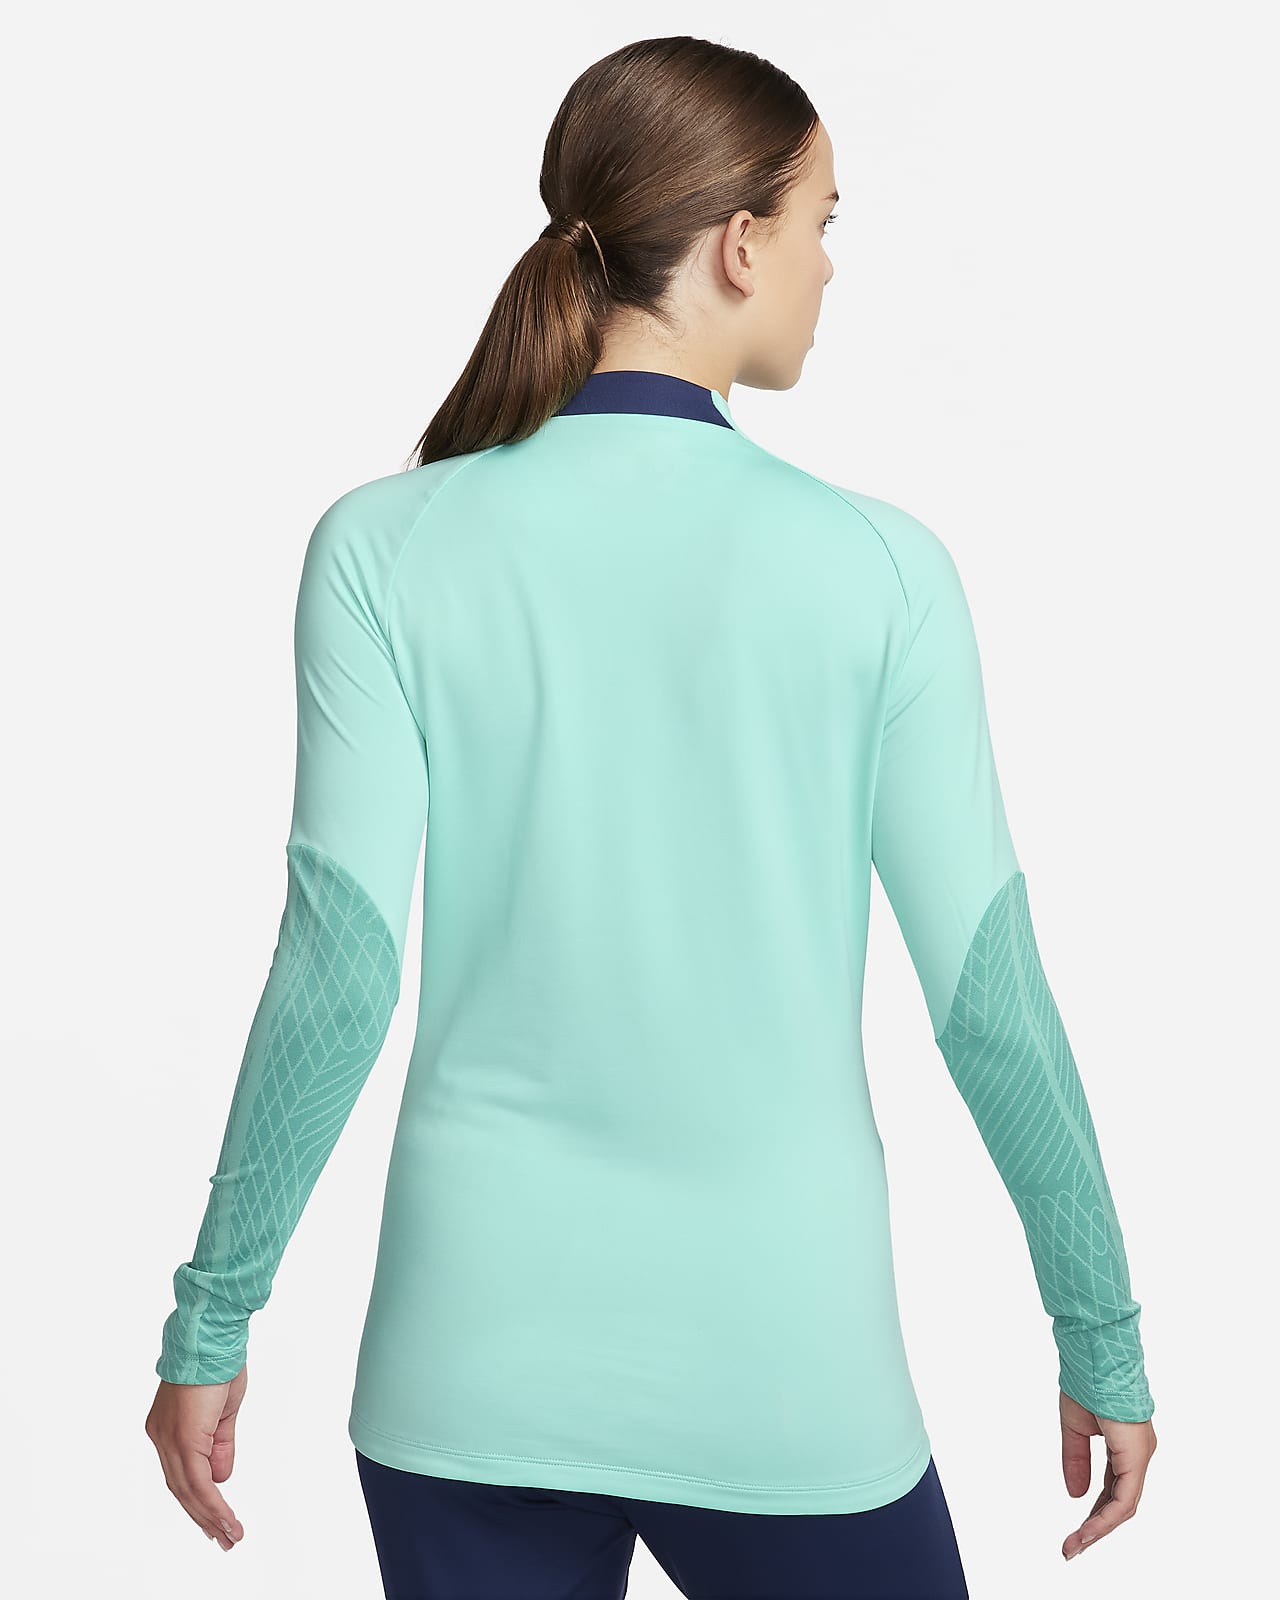 Nike Dri-Fit Long Sleeve Shirt Women's Navy New L